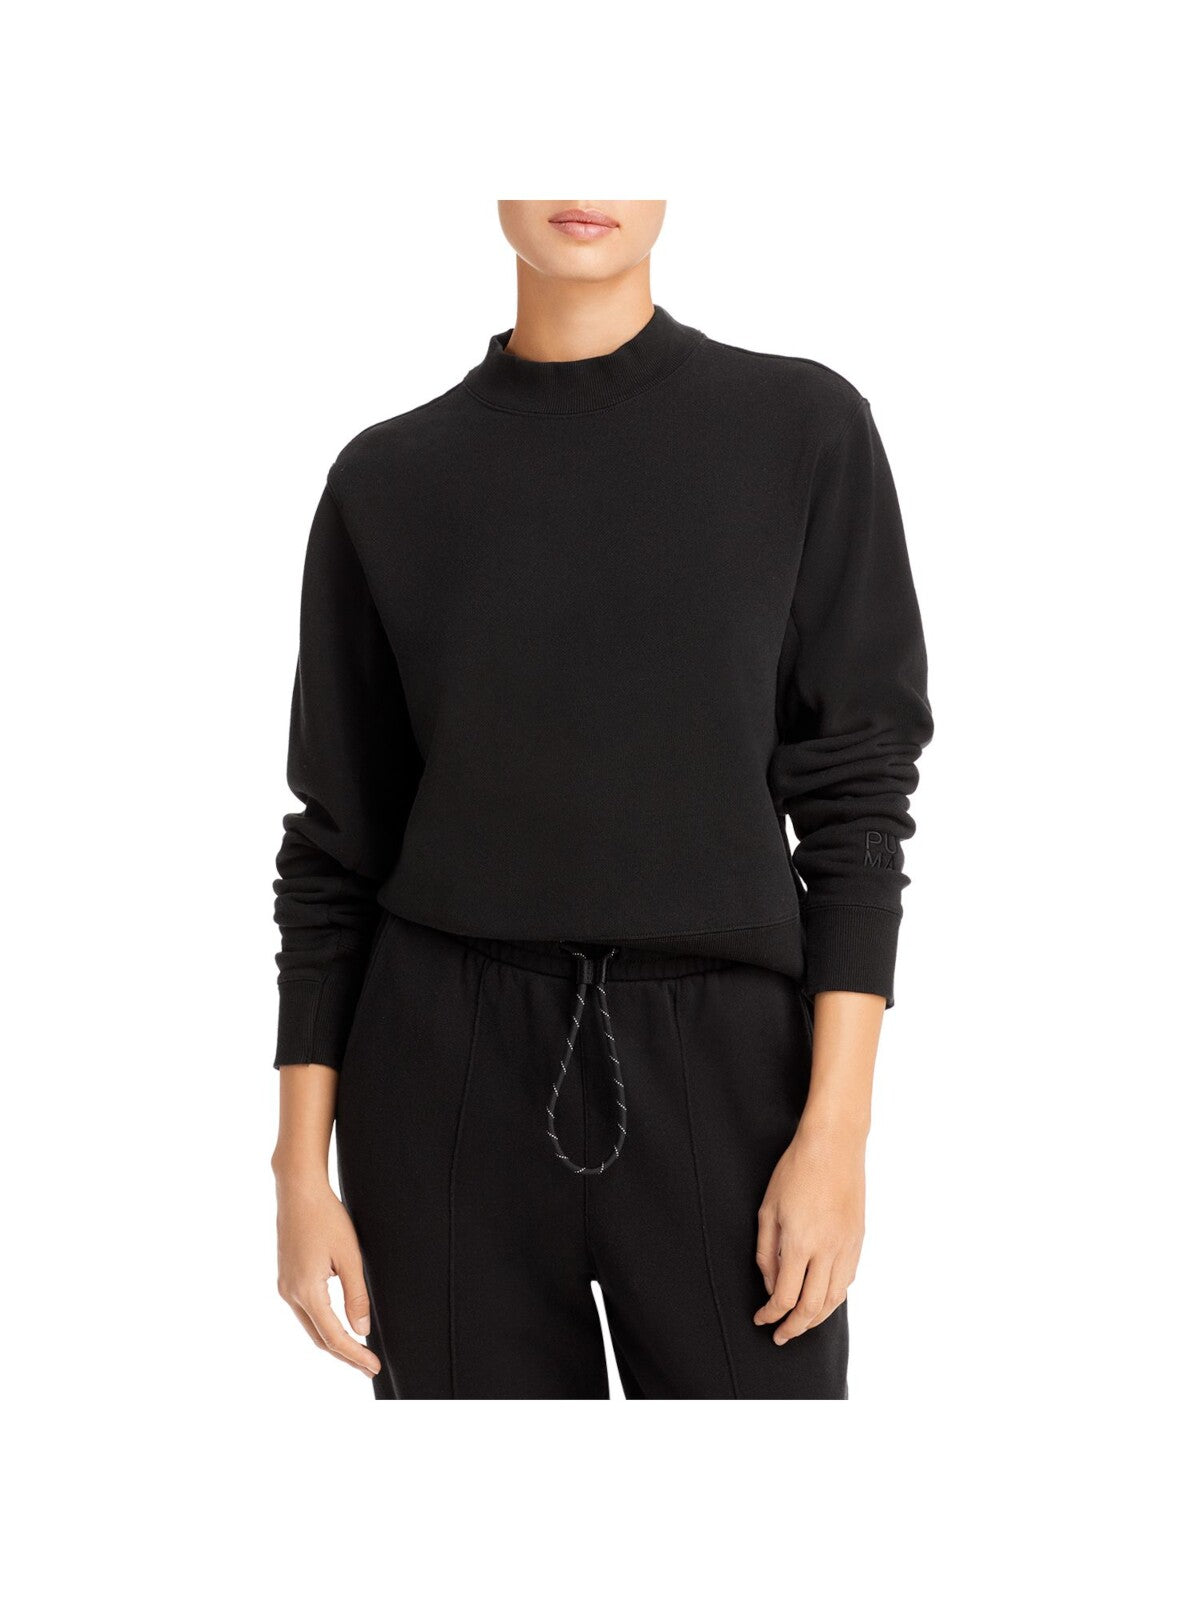 PUMA Womens Black Sweatshirt XL